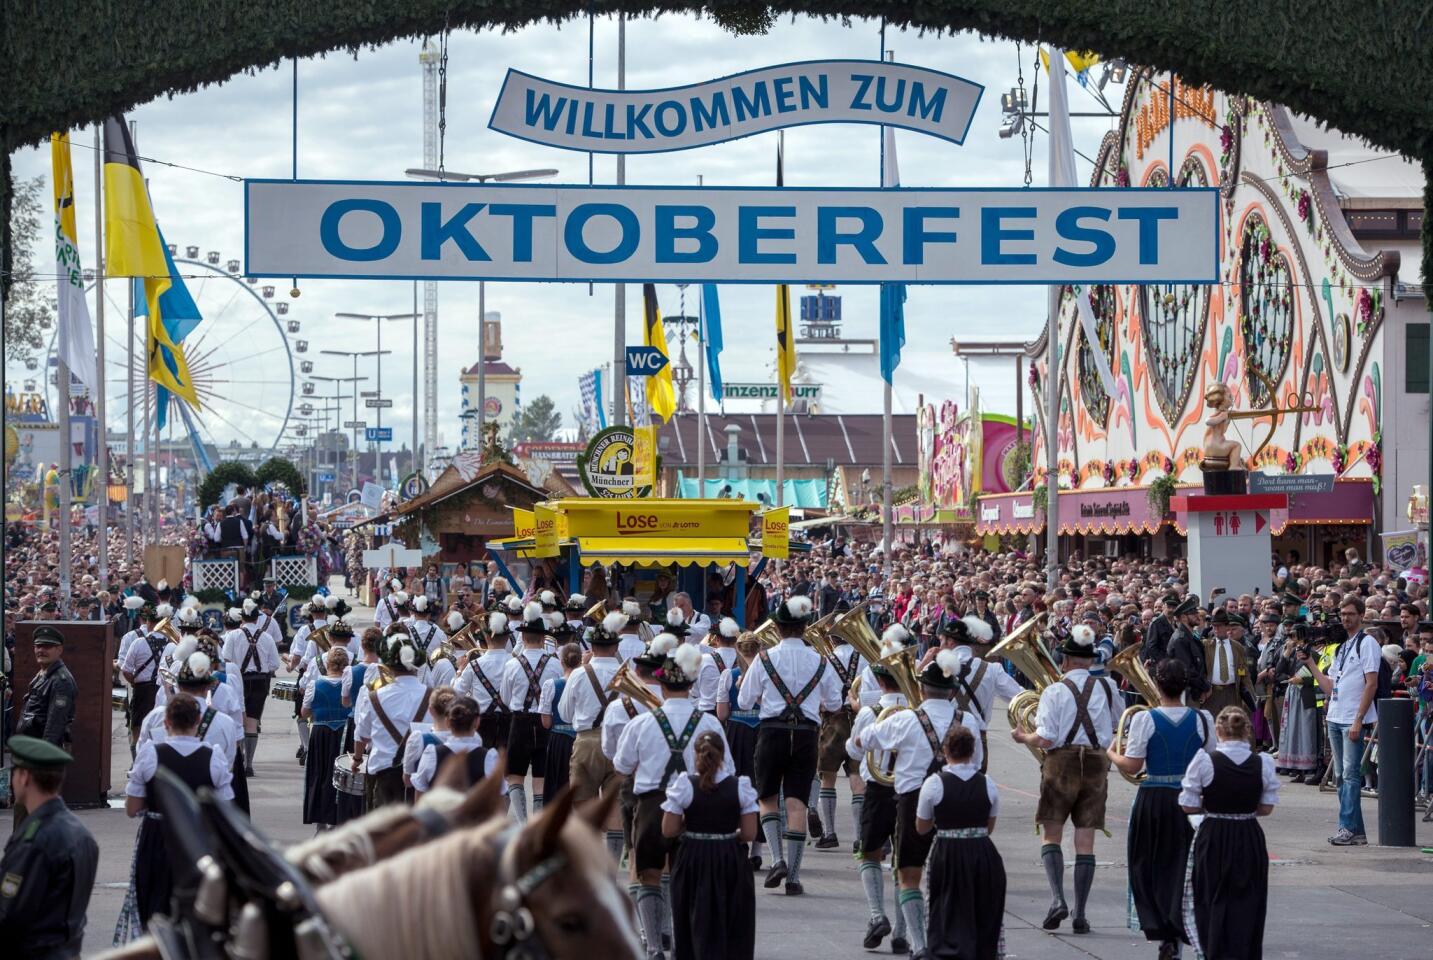 182nd Oktoberfest starts